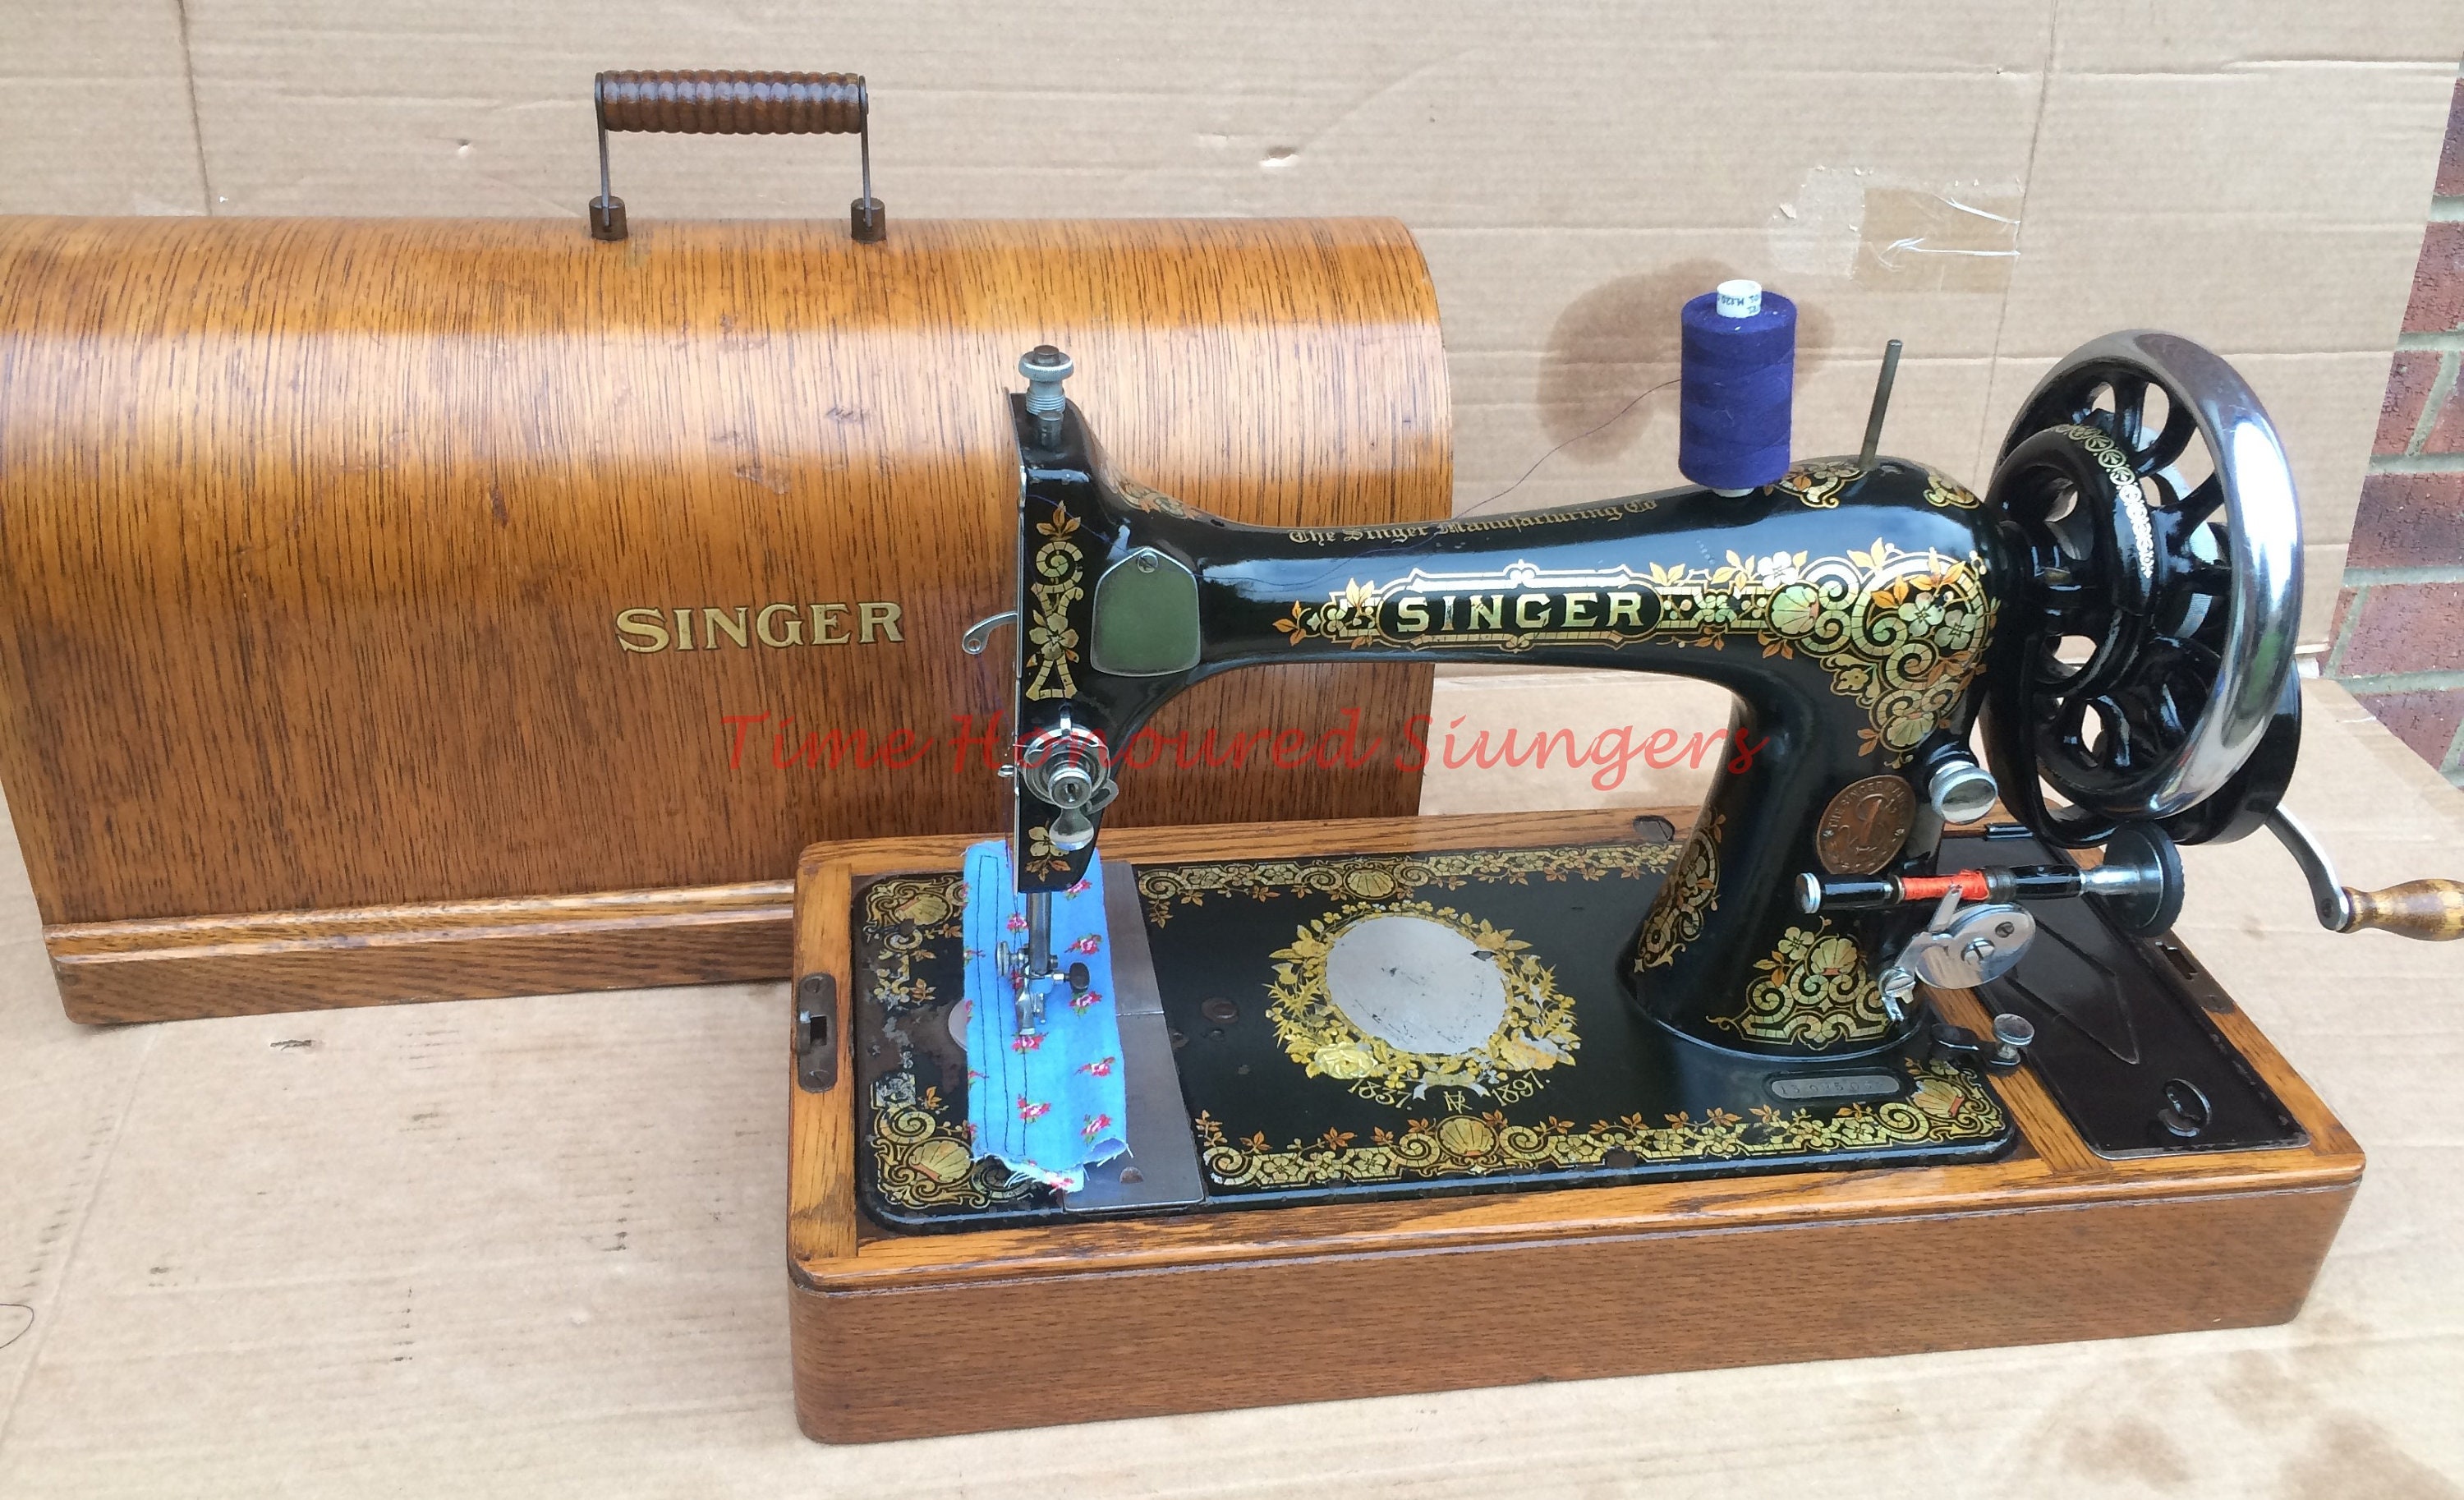 MAQUINA de COSER PEQUENA SINGER, EPOCA 1930, antigua aleman - Foto 2   Máquinas de coser antiguas, Maquina de coser, Máquinas de coser singer